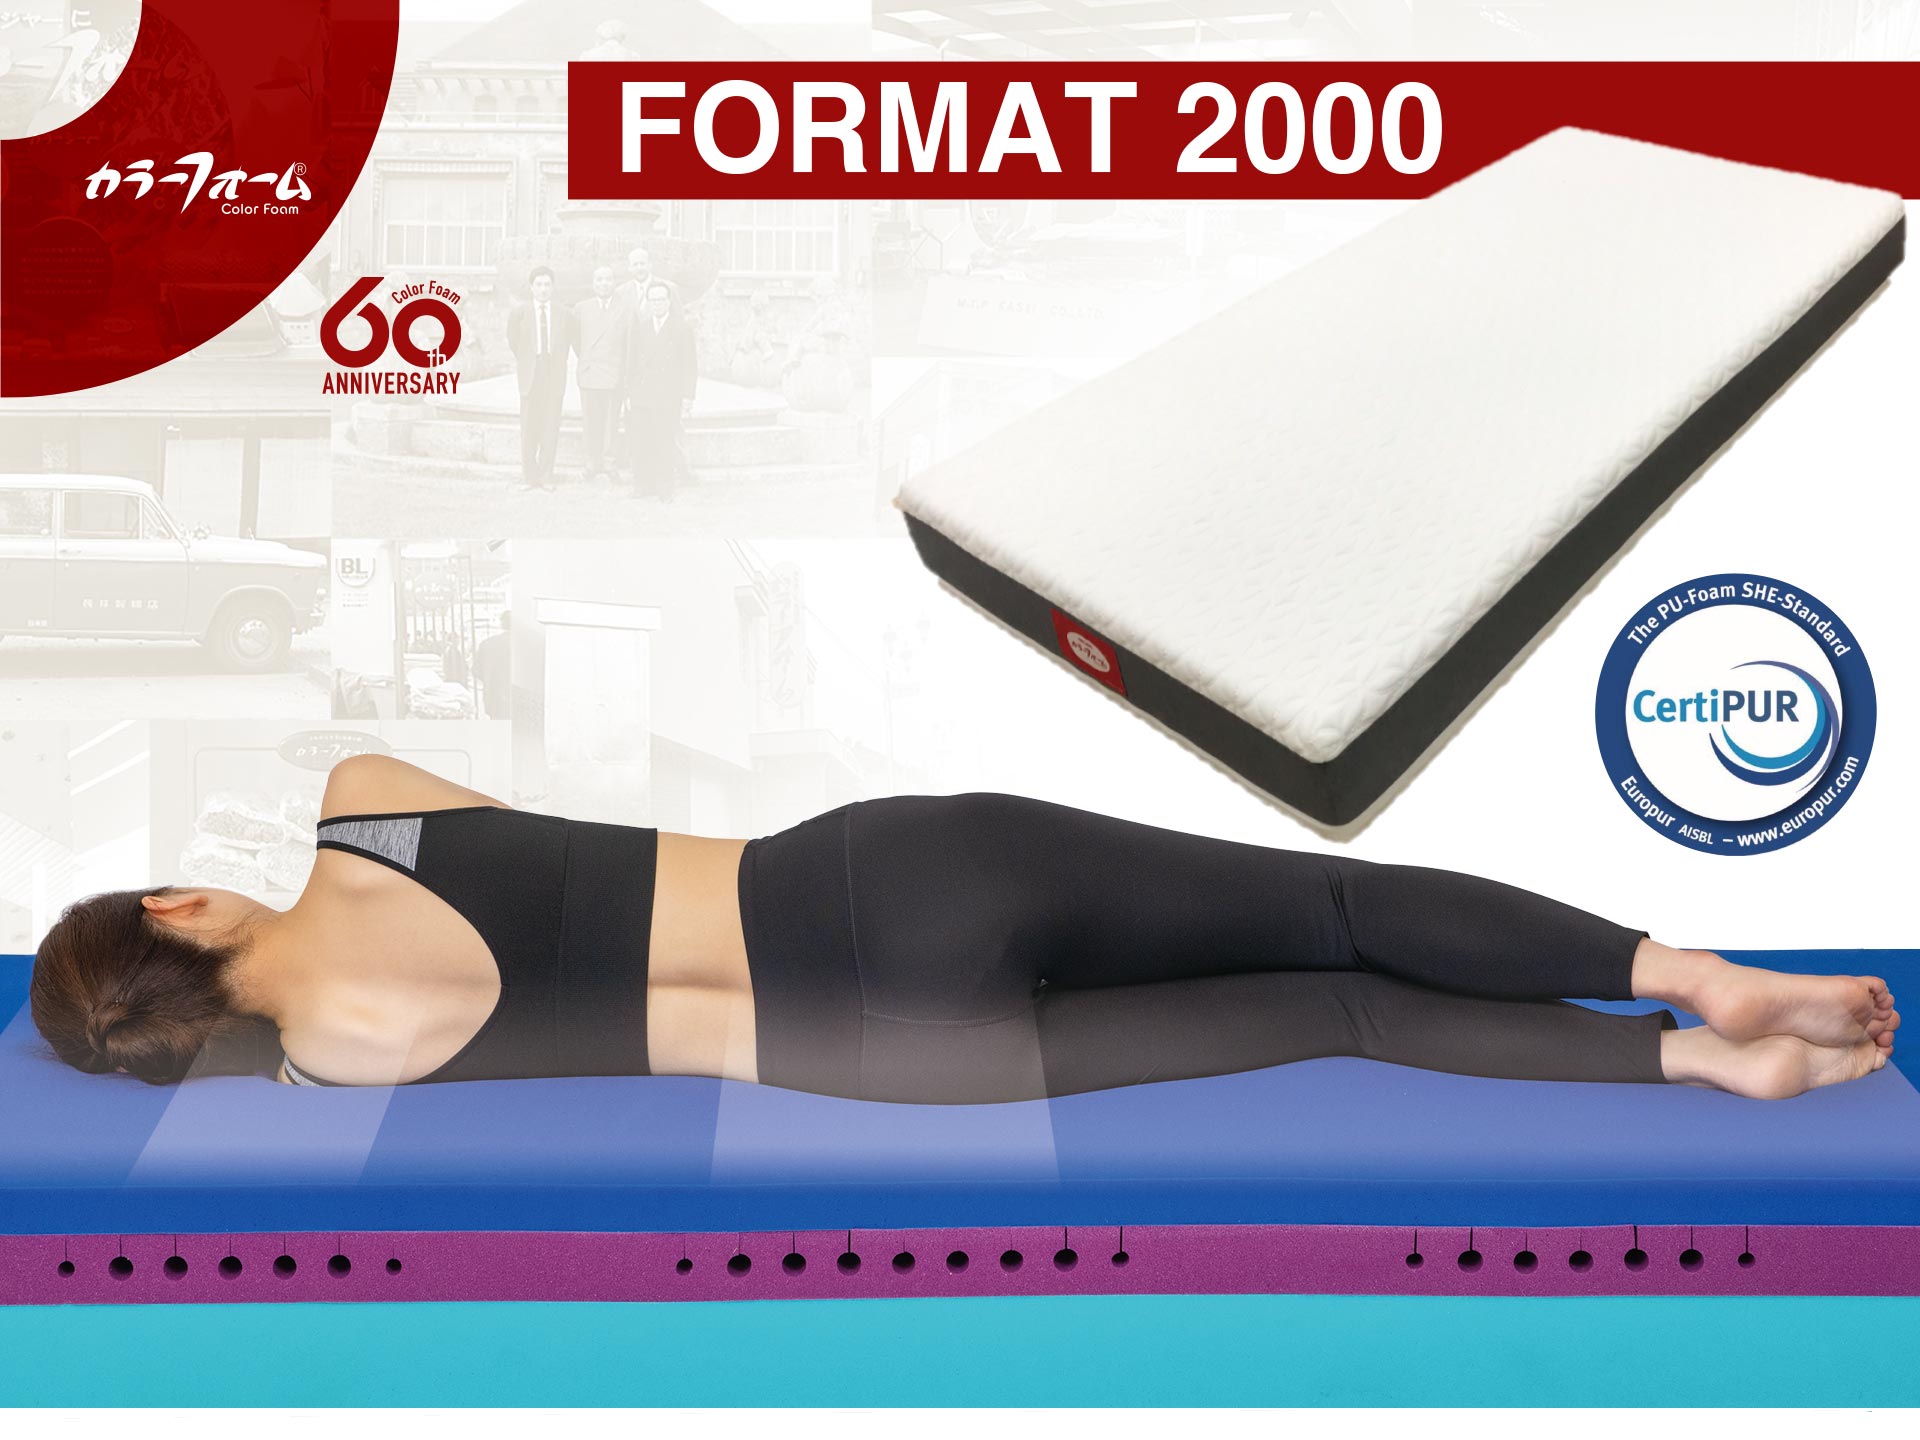 FORMAT 2000